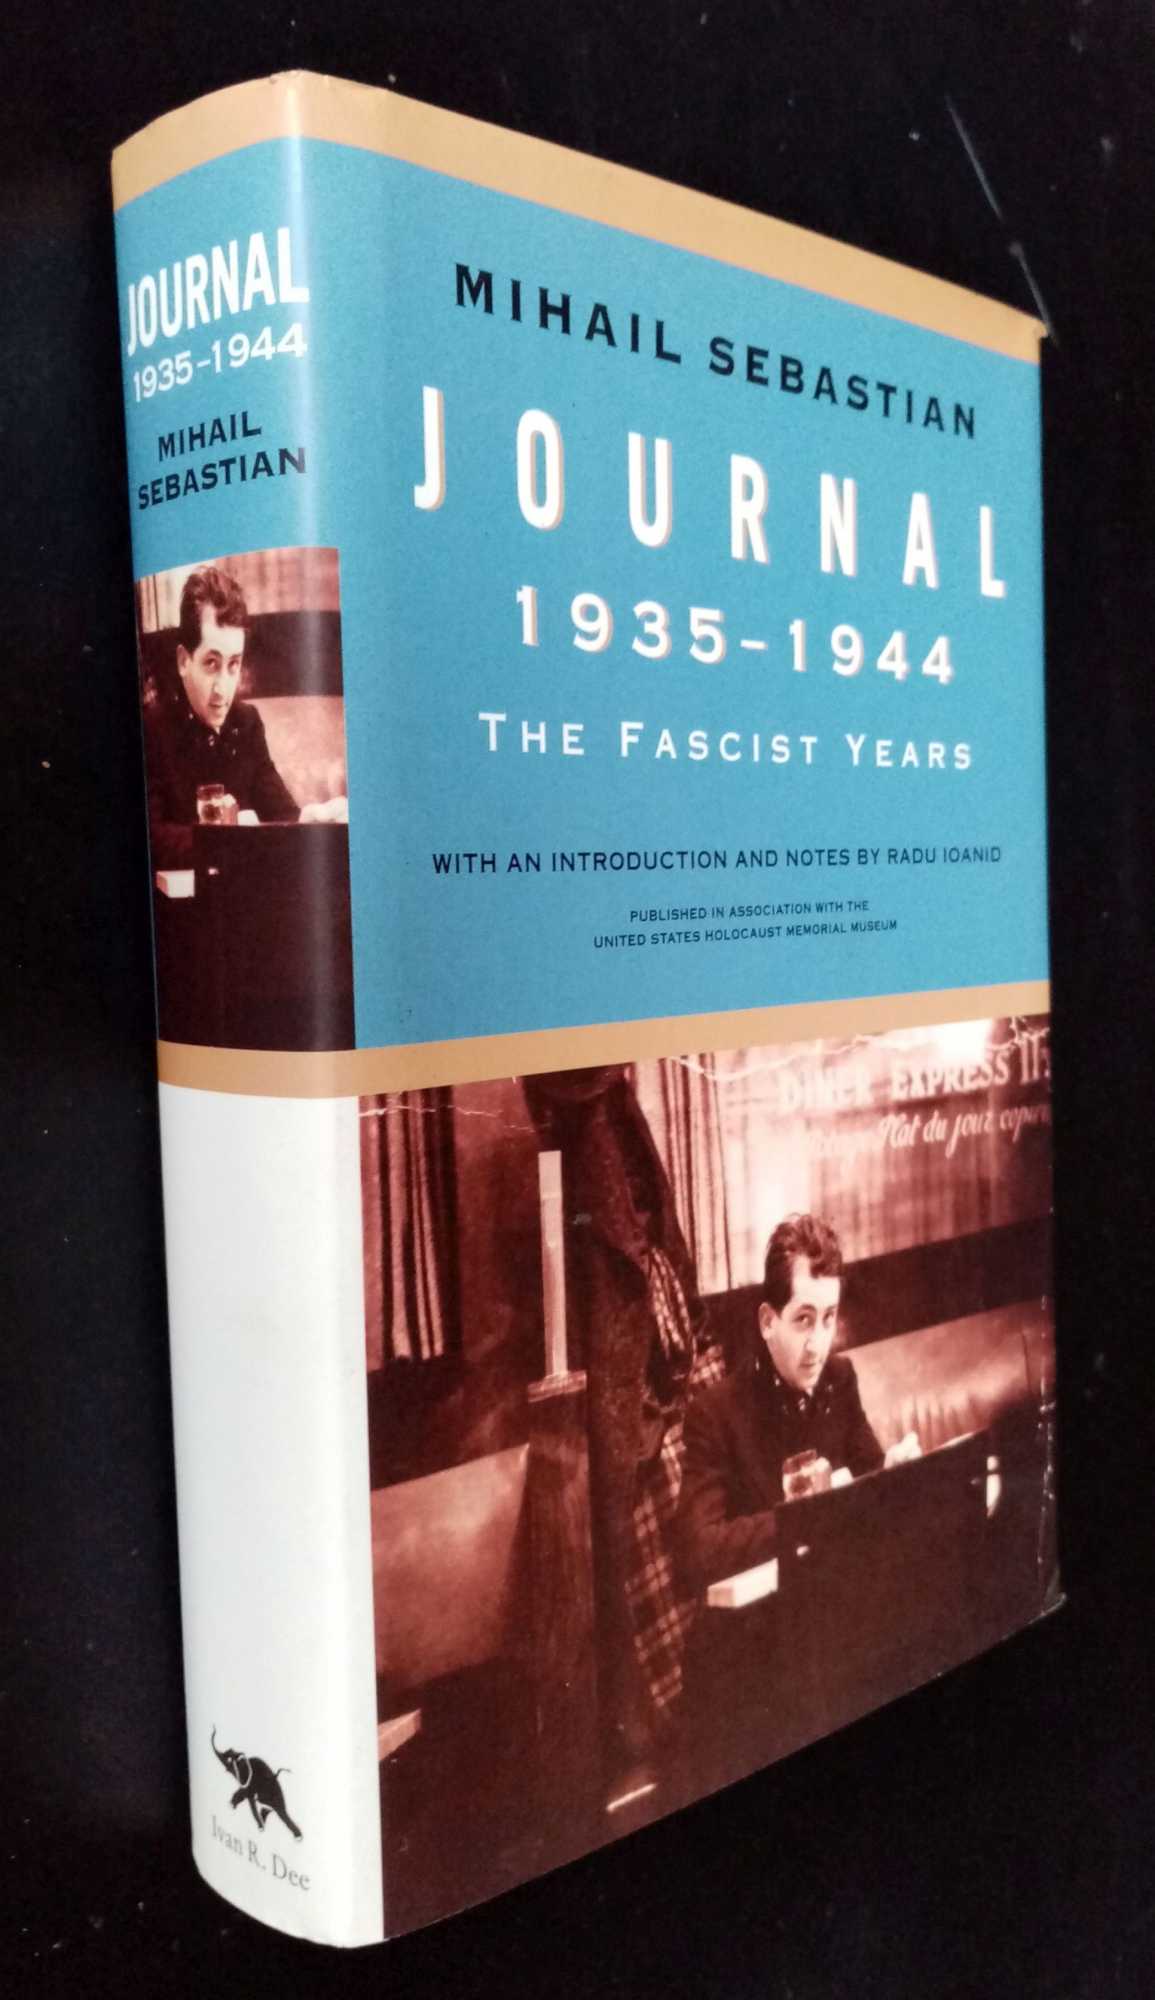 Mihail Sebastian - Journal 1935-1944 The Fascist Years